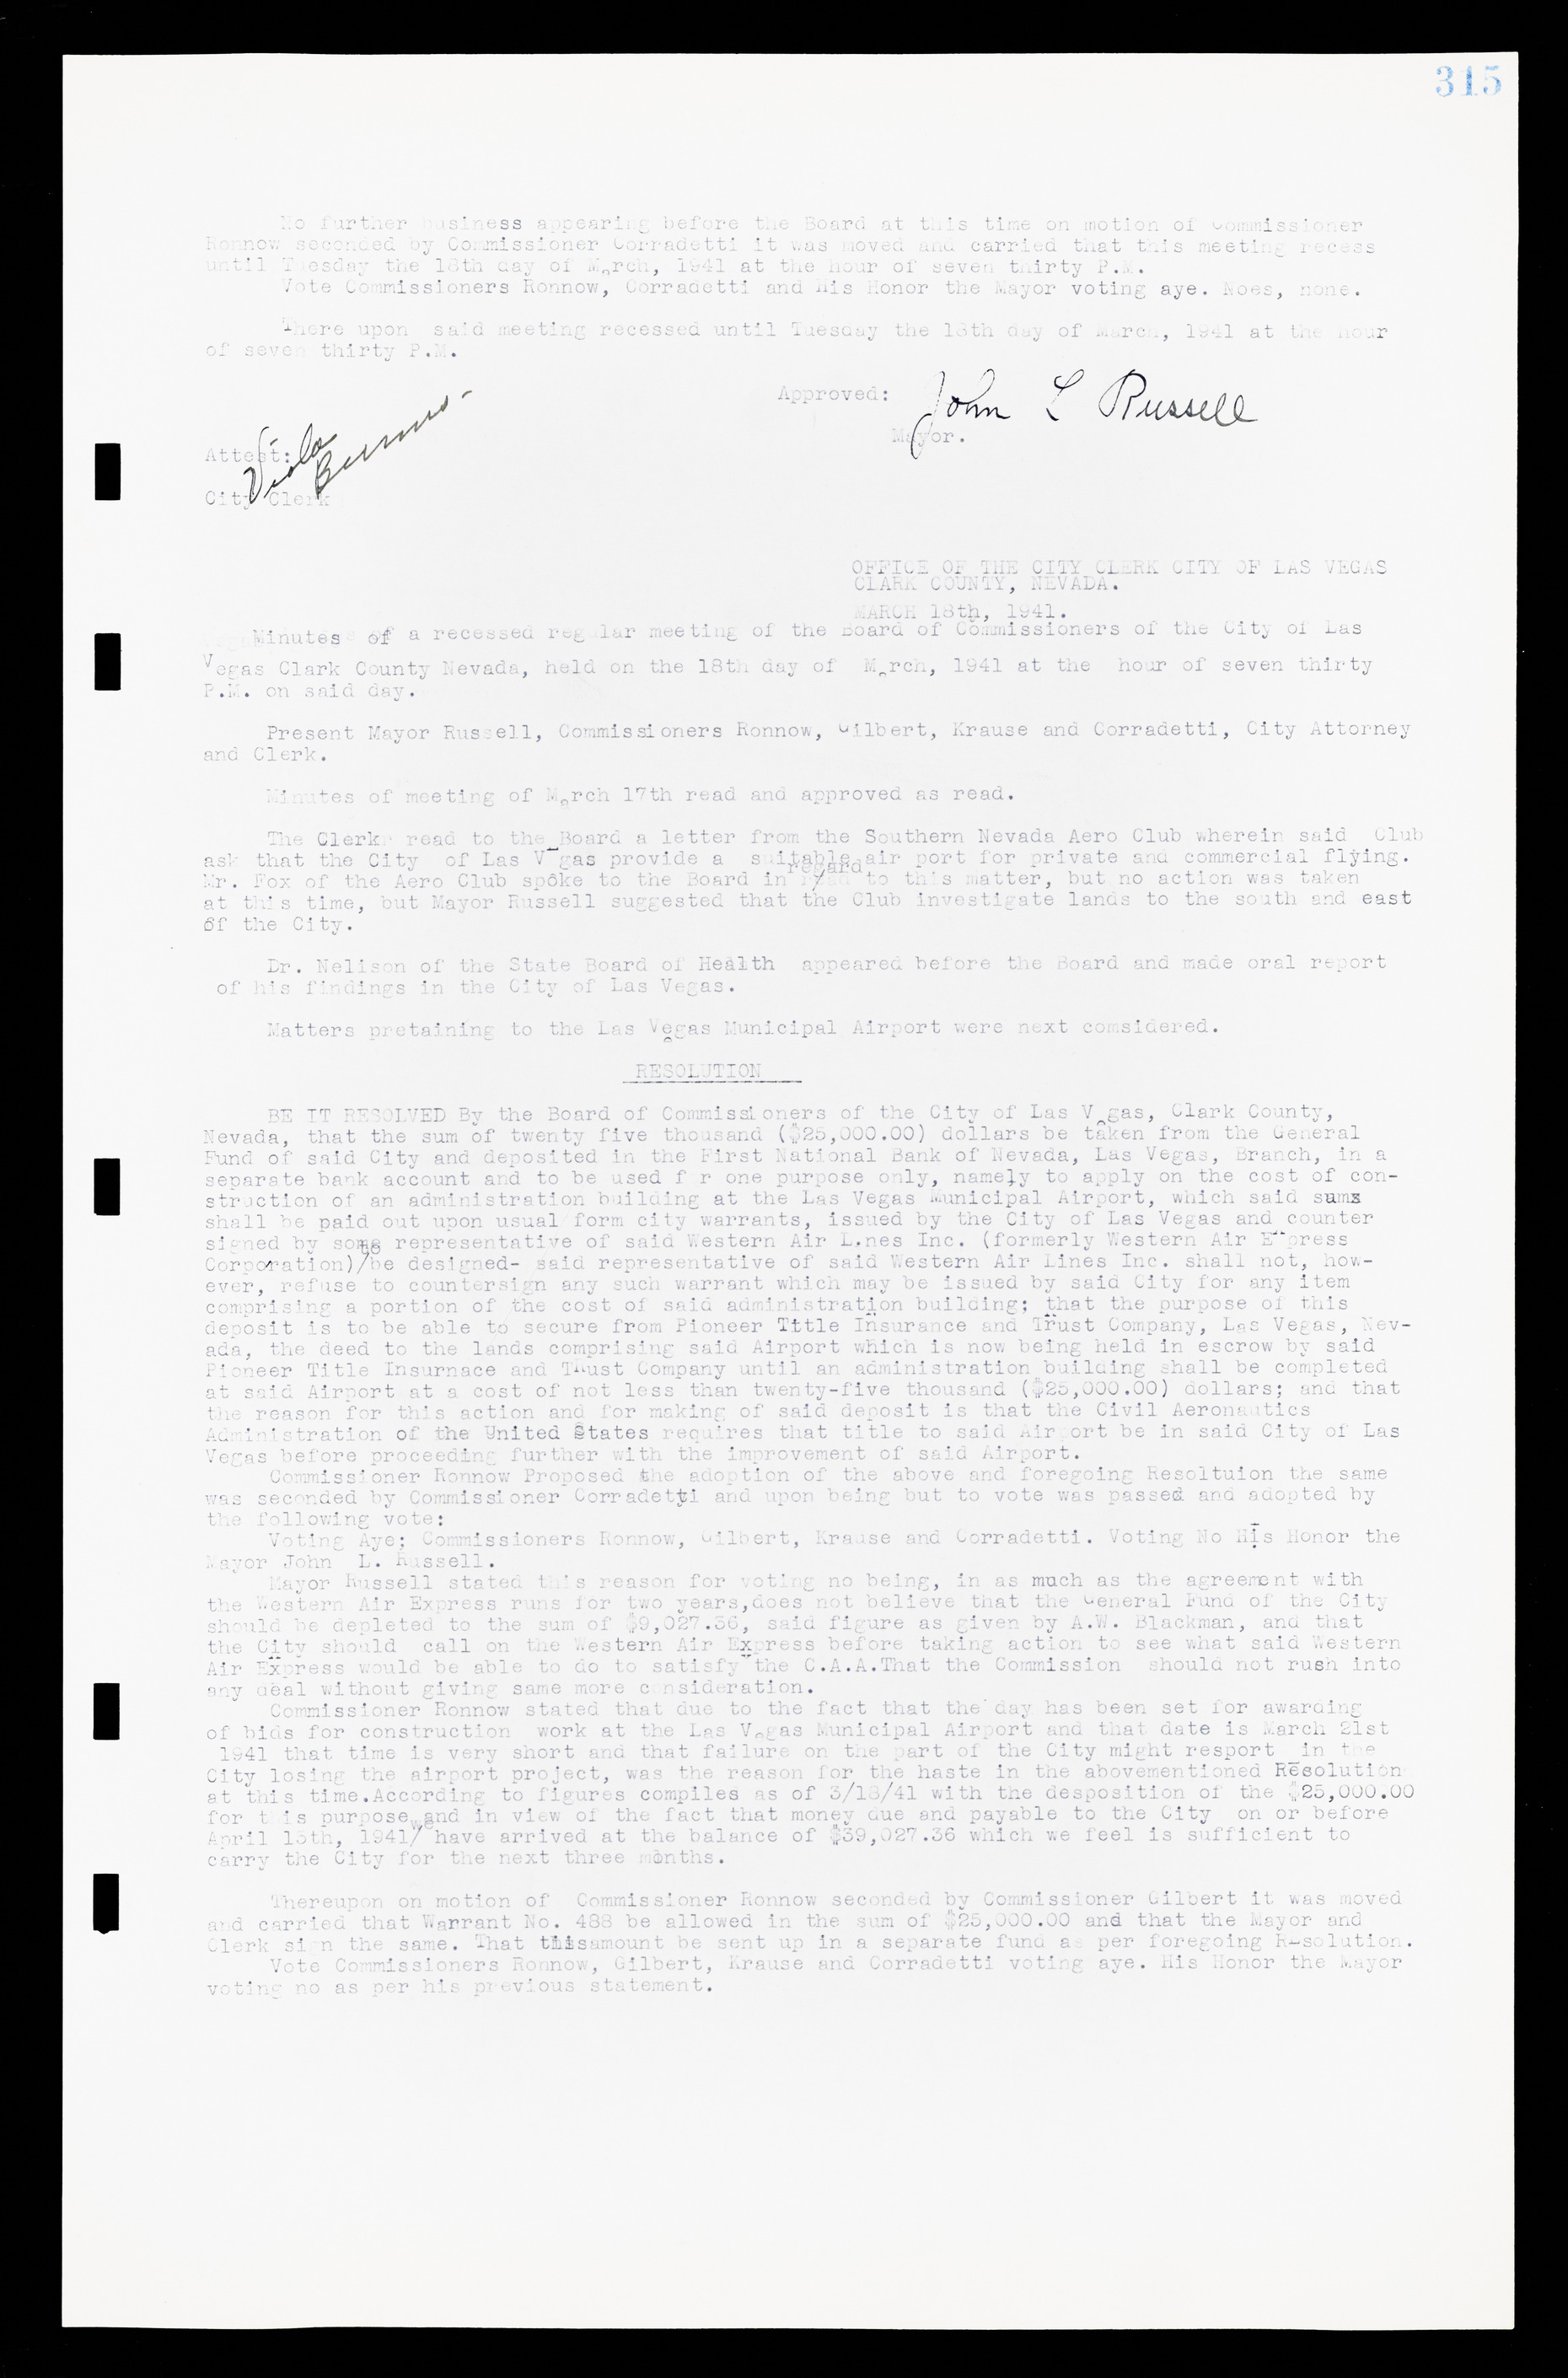 Las Vegas City Commission Minutes, February 17, 1937 to August 4, 1942, lvc000004-339